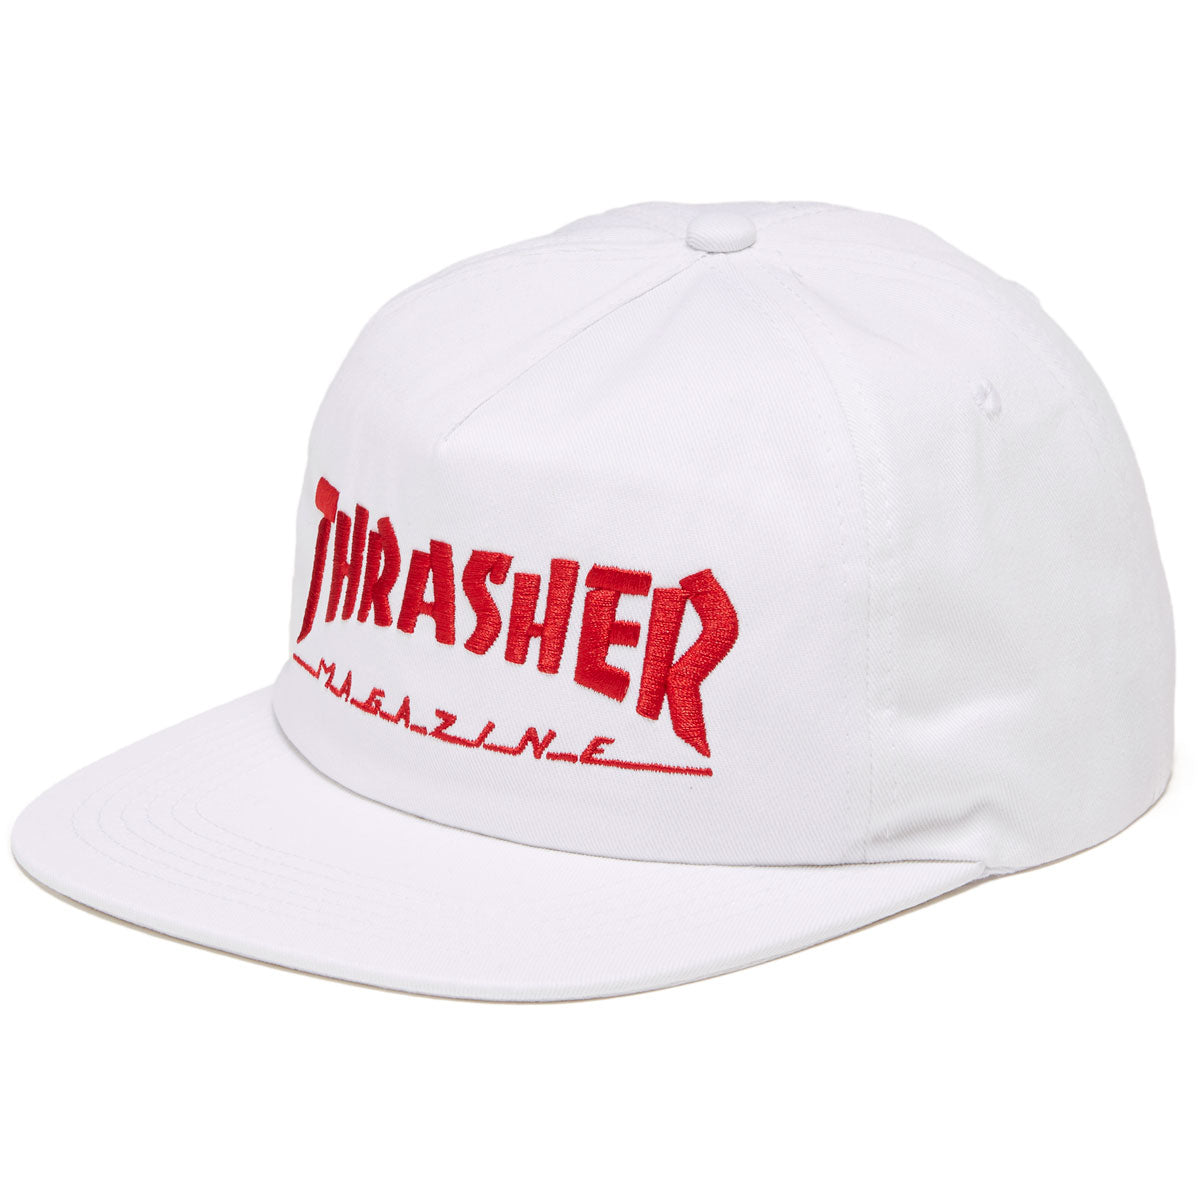 Thrasher Mag Logo Snapback Hat - White image 1